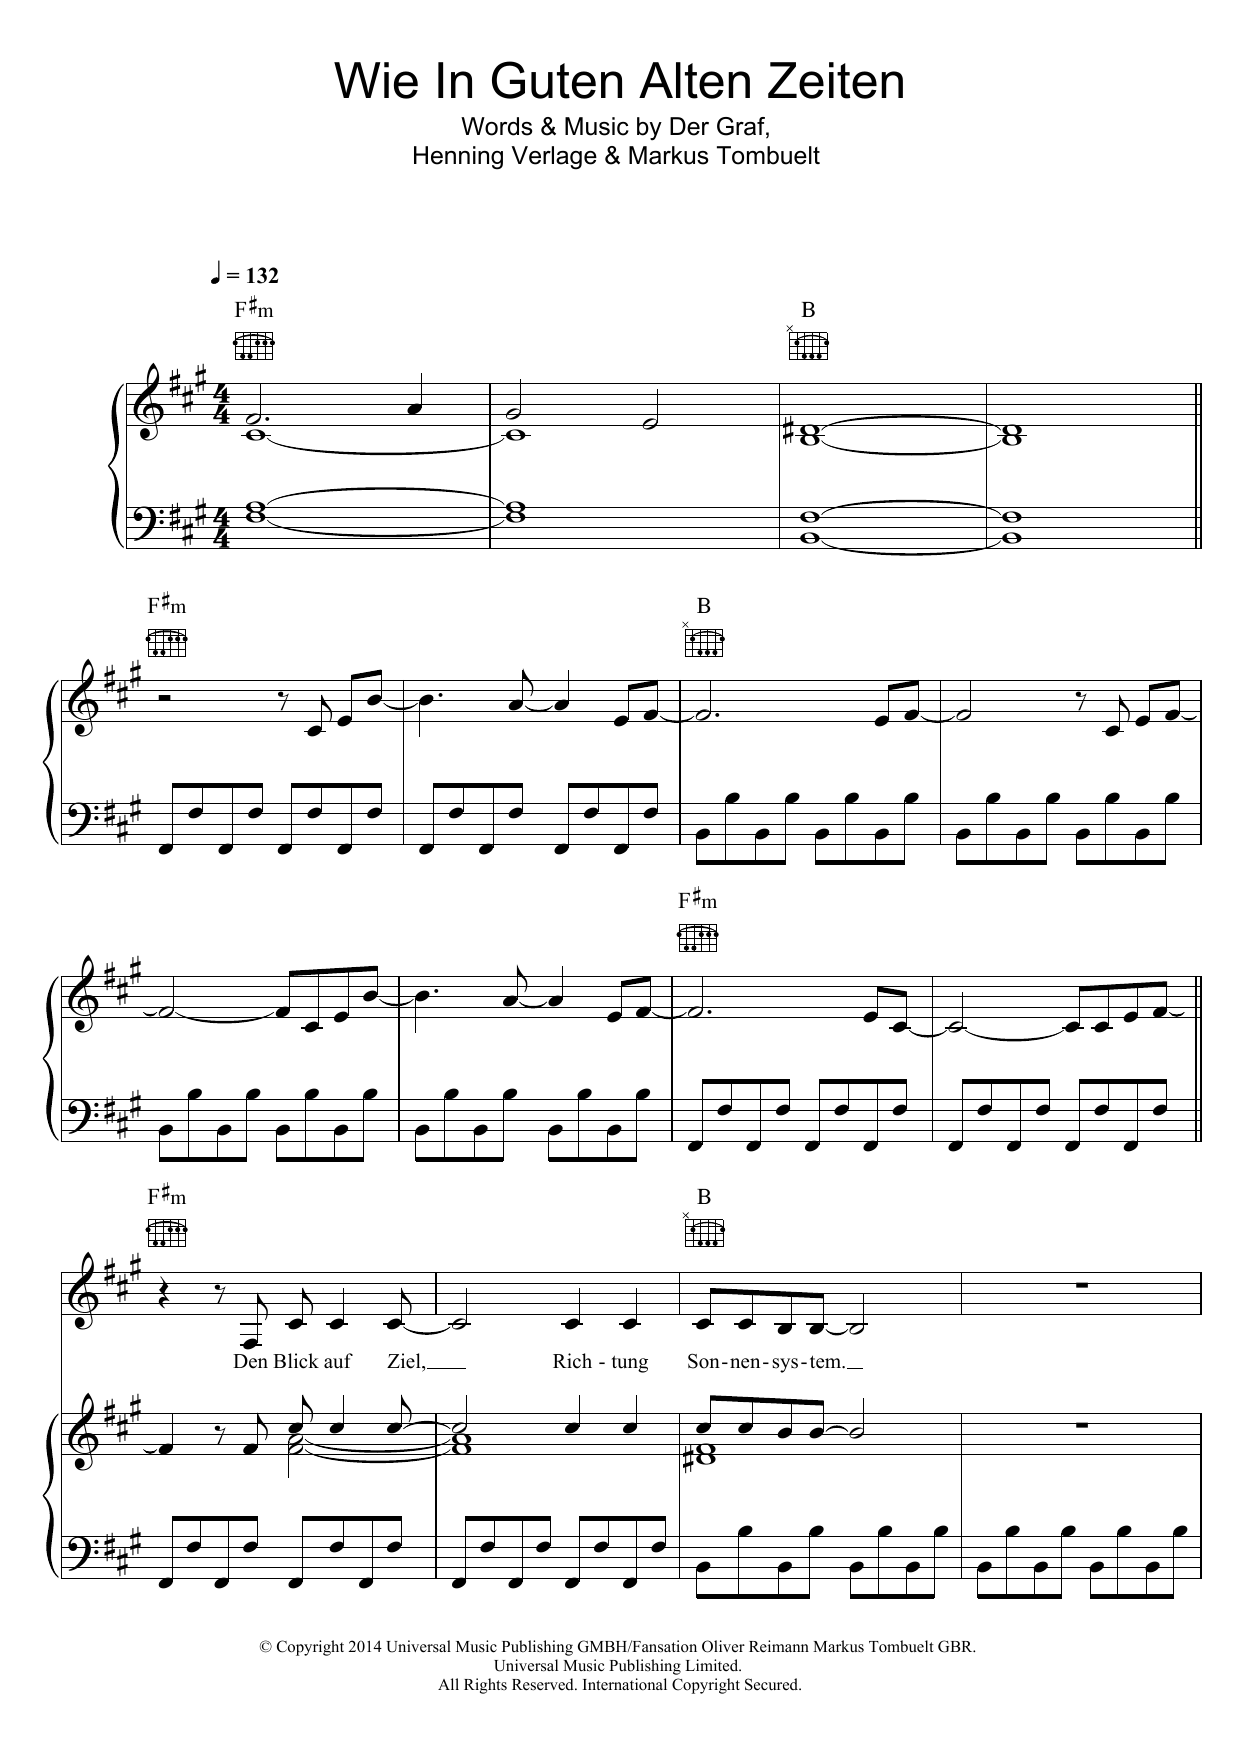 Unheilig Wie In Guten Alten Zeiten Sheet Music Notes & Chords for Piano, Vocal & Guitar (Right-Hand Melody) - Download or Print PDF